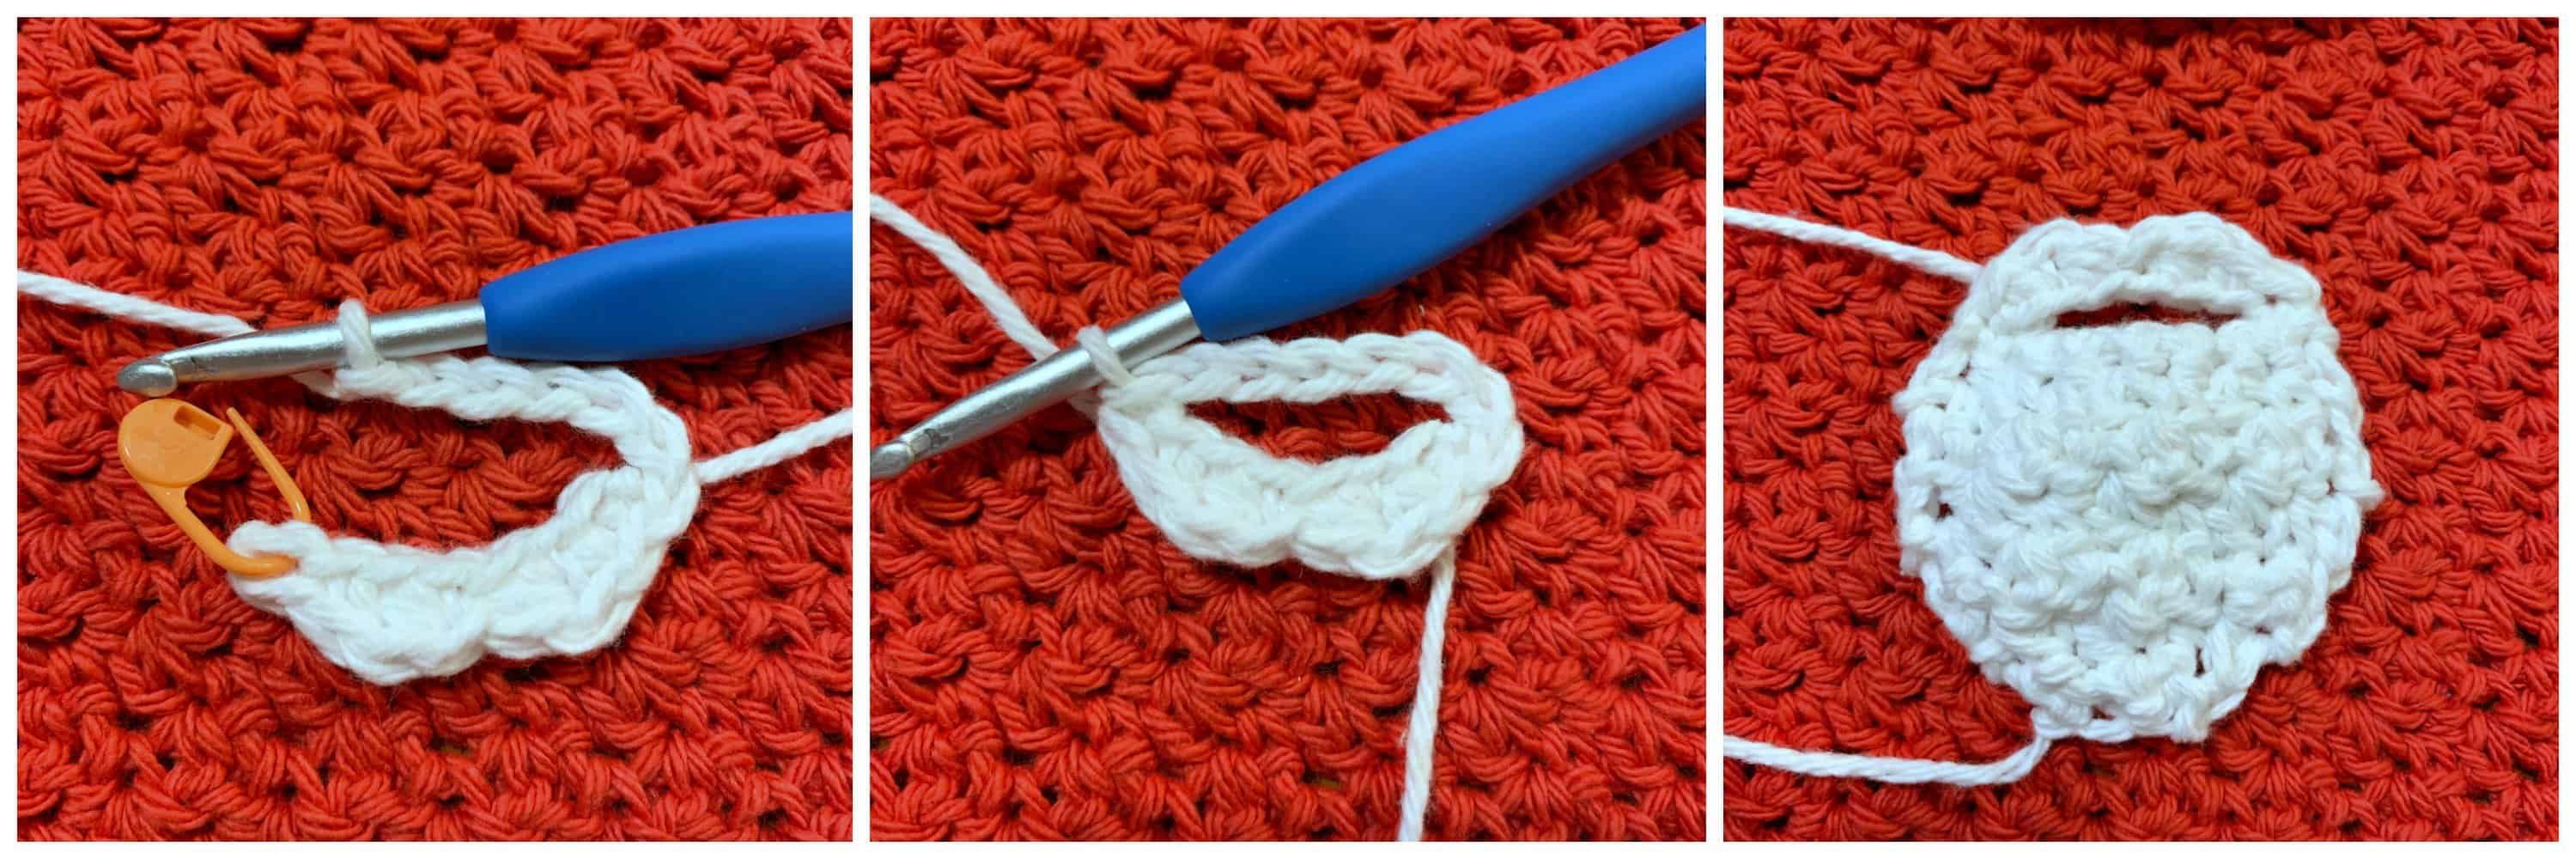 Small crochet beard for Santa and leprechaun towel.